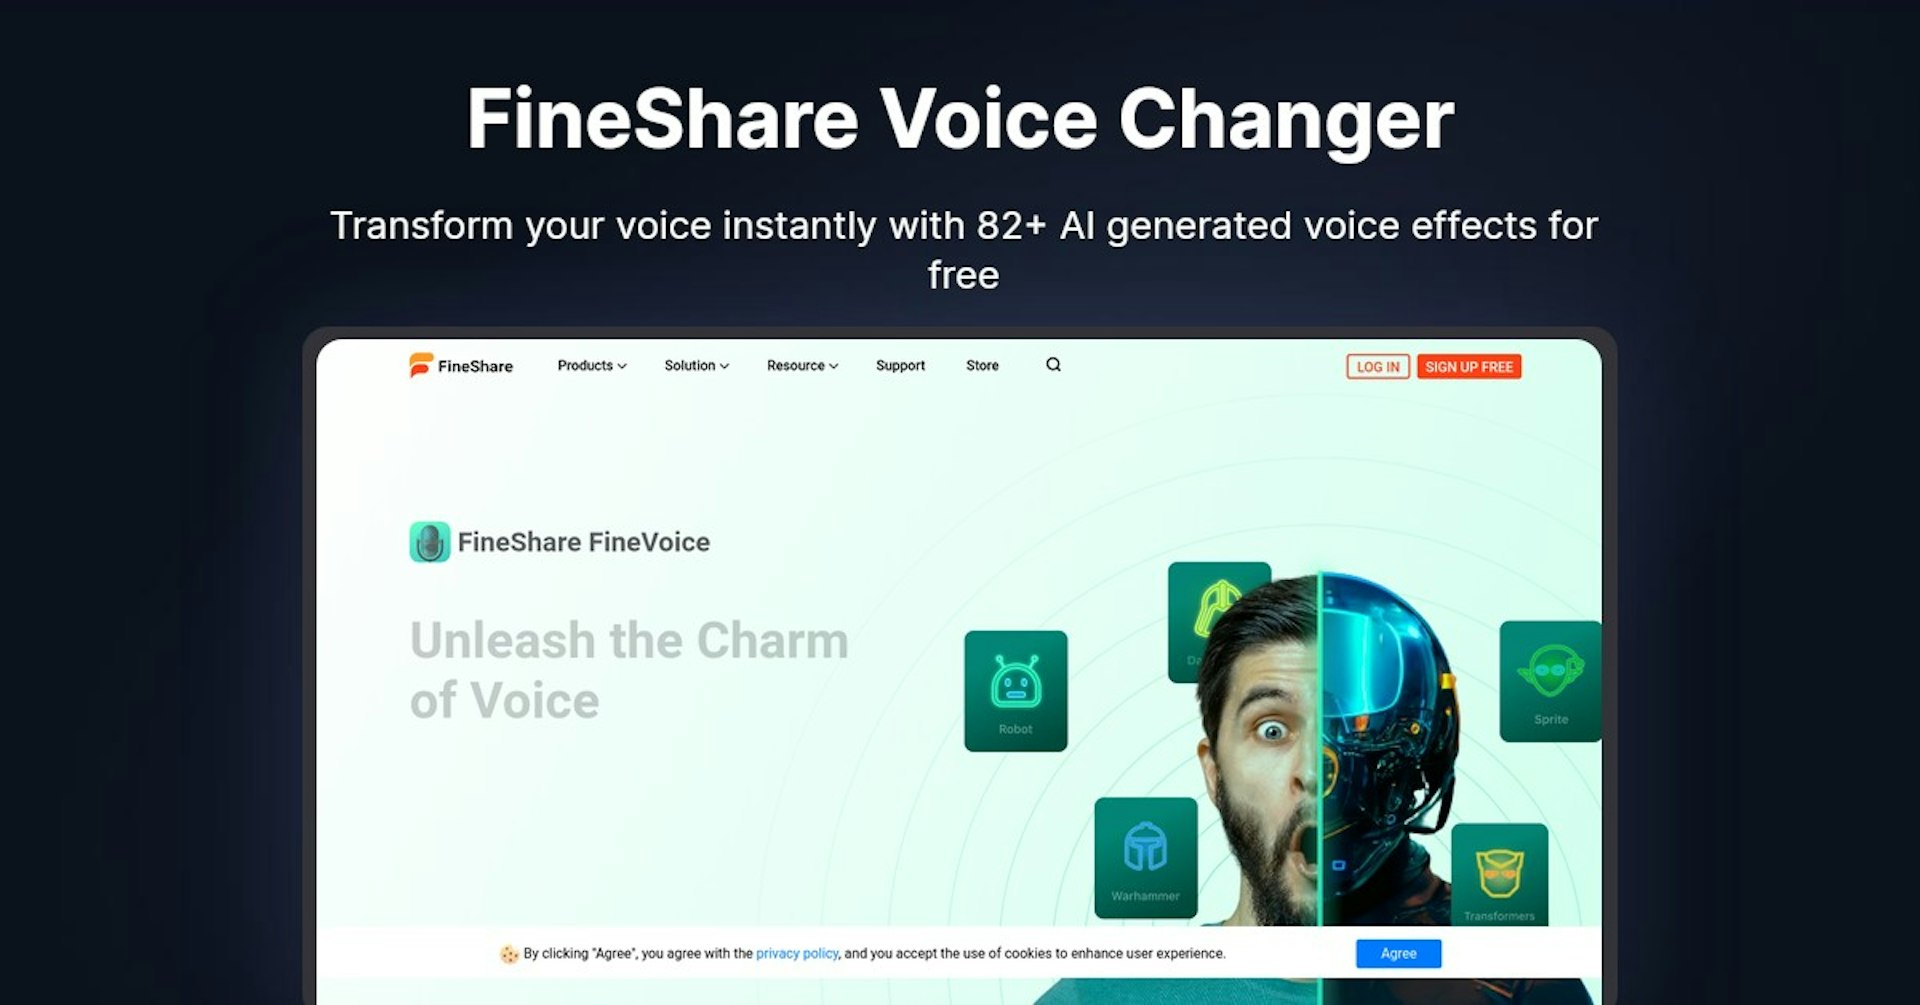 FineShare Voice Changer